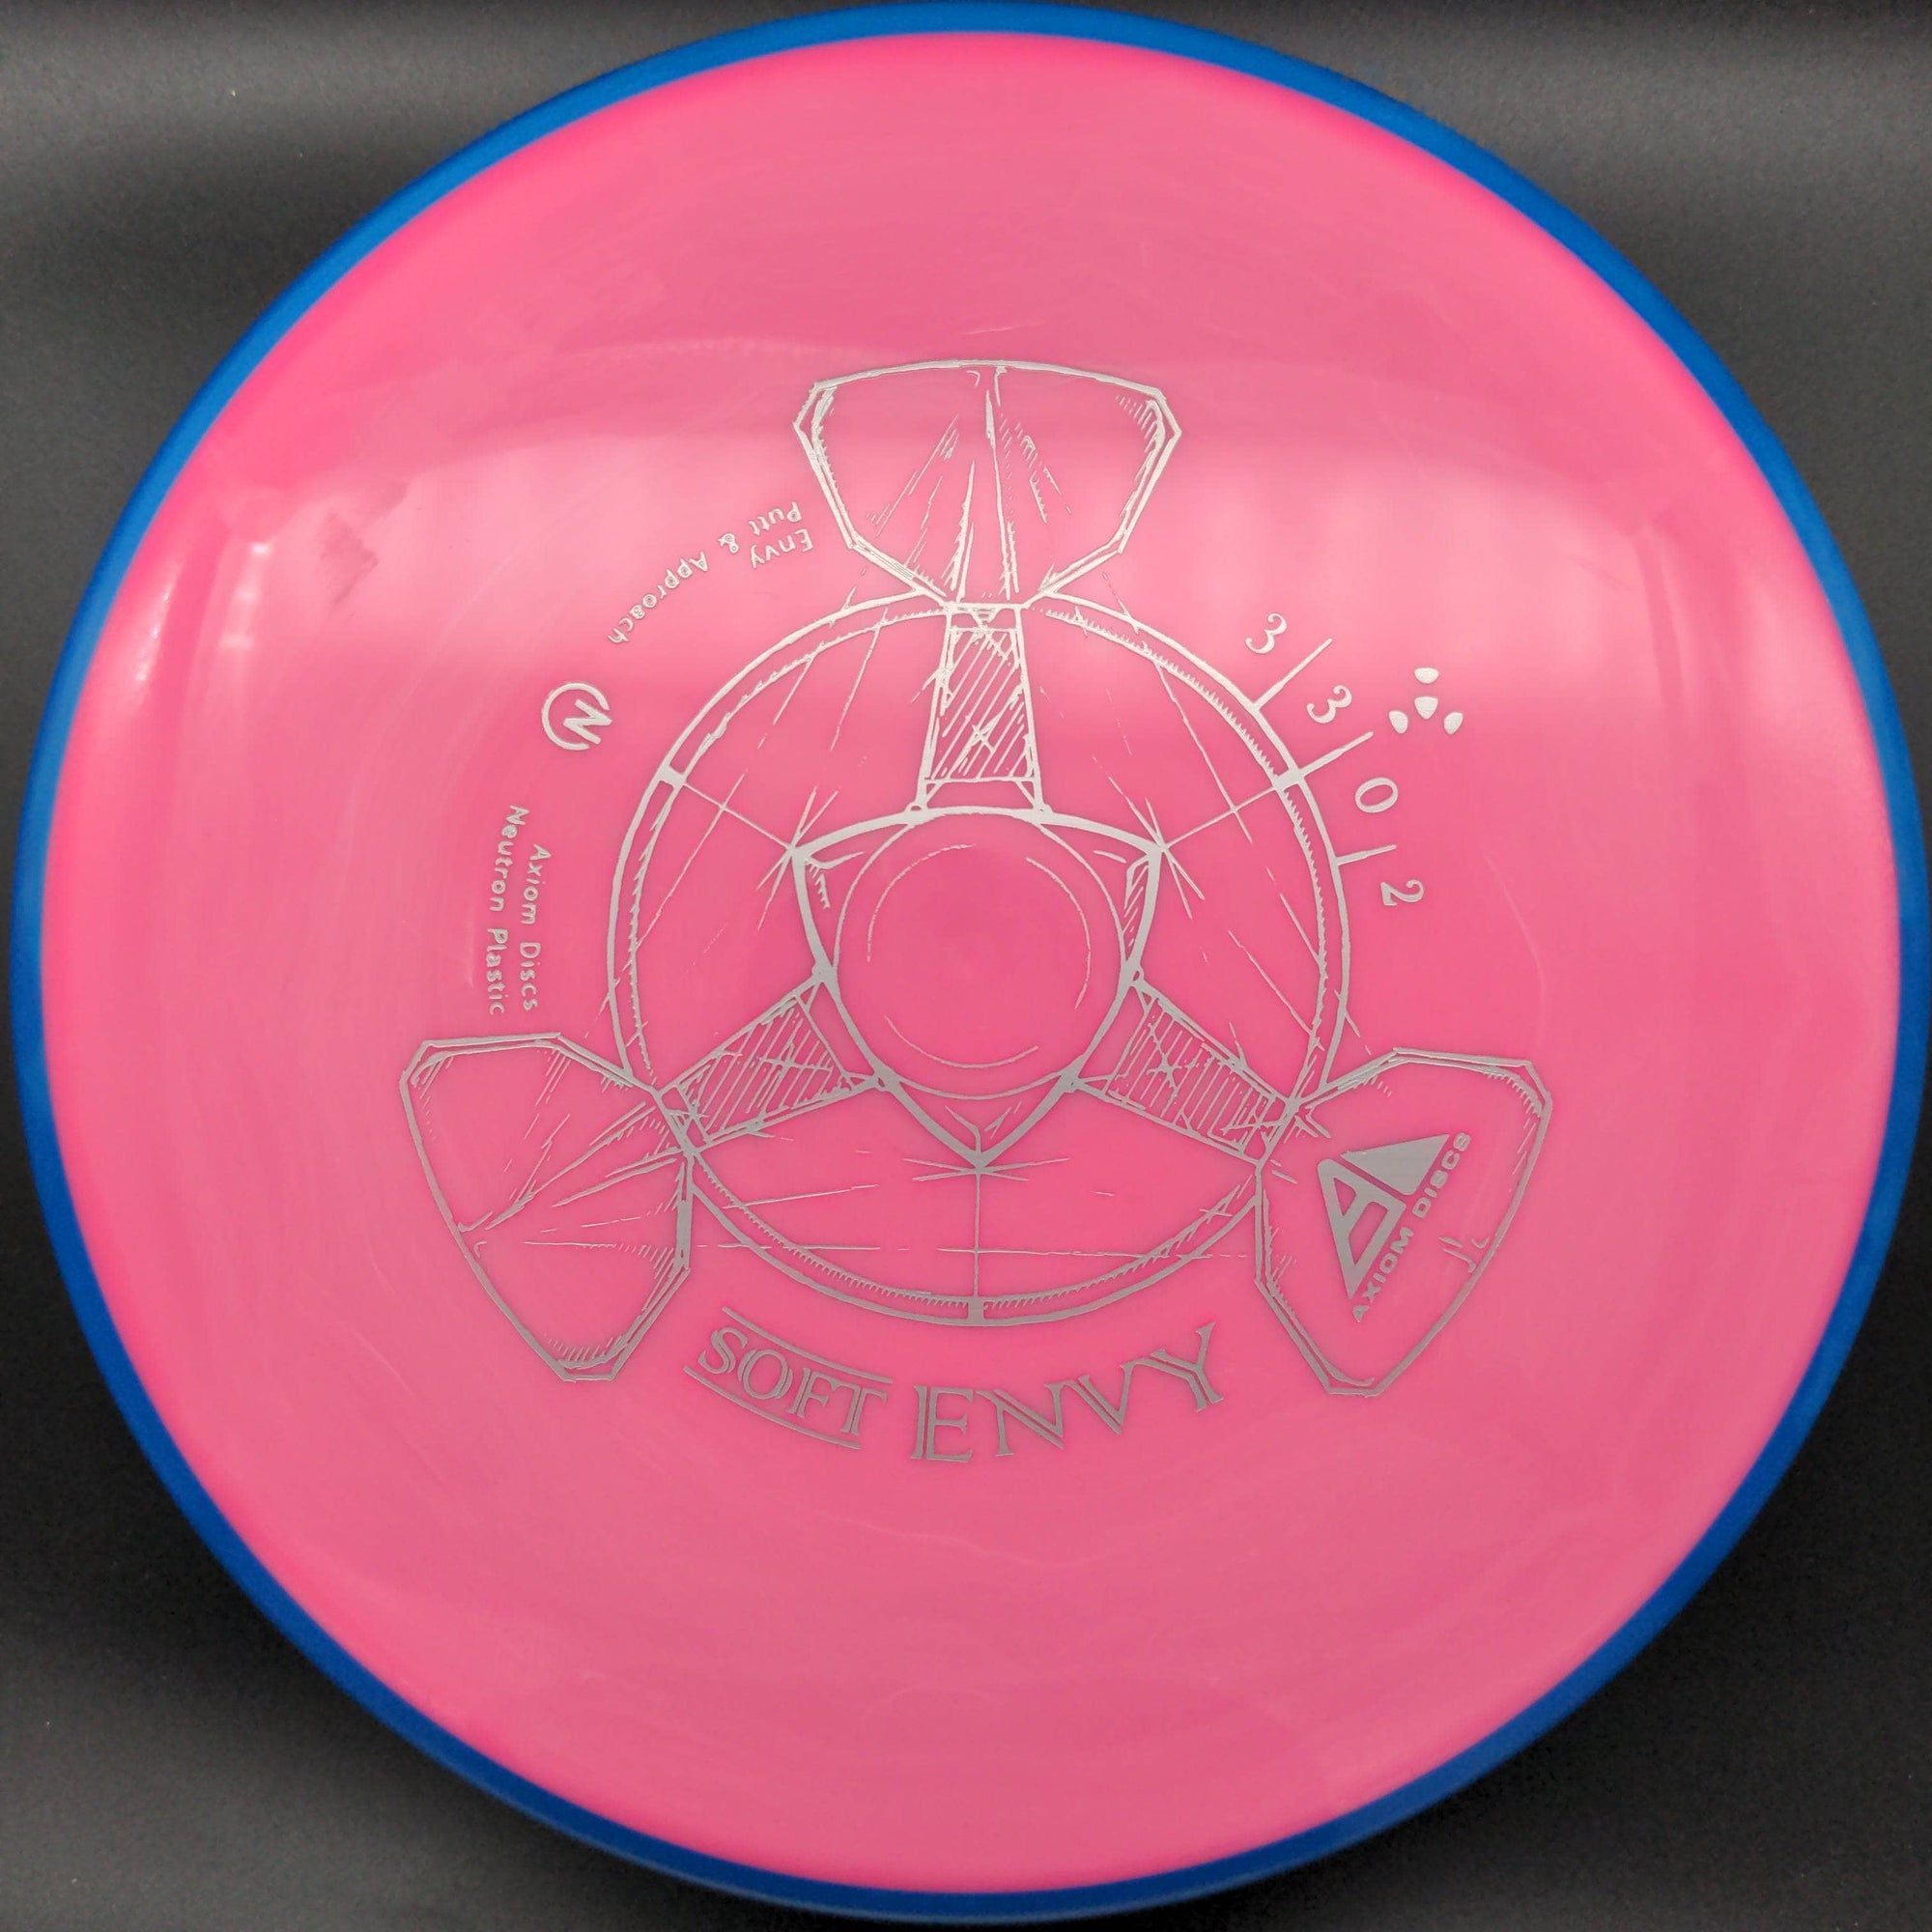 Axiom Putter Blue Rim Pink Plate 172g Envy, Neutron Soft